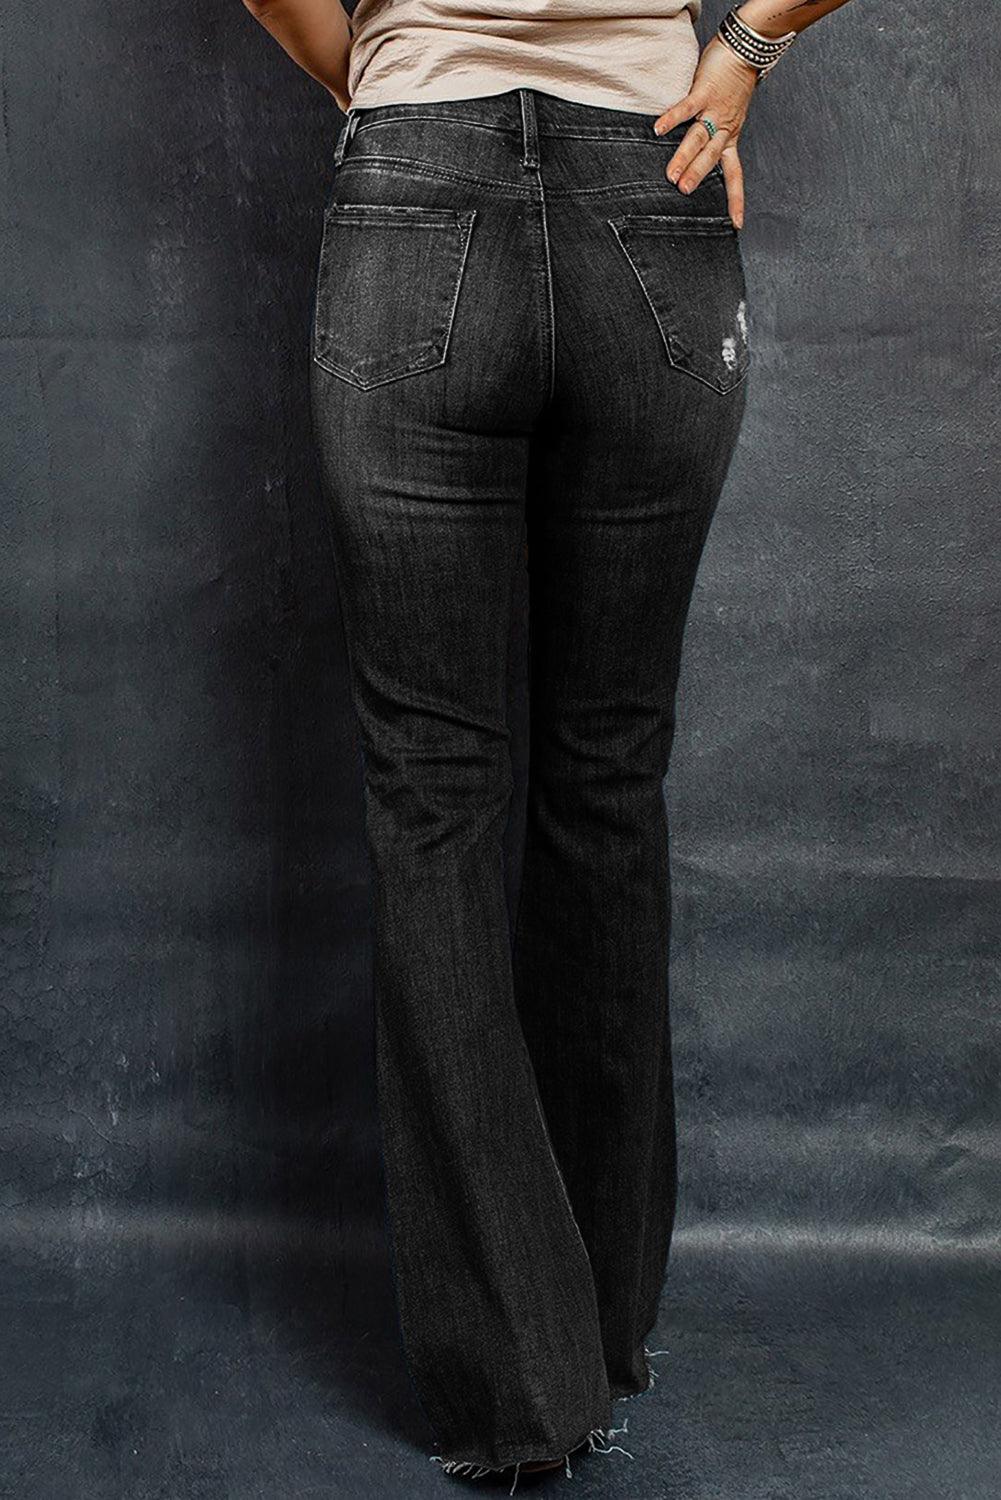 Distressed Raw Hem Flare Jeans - BELLATRENDZ